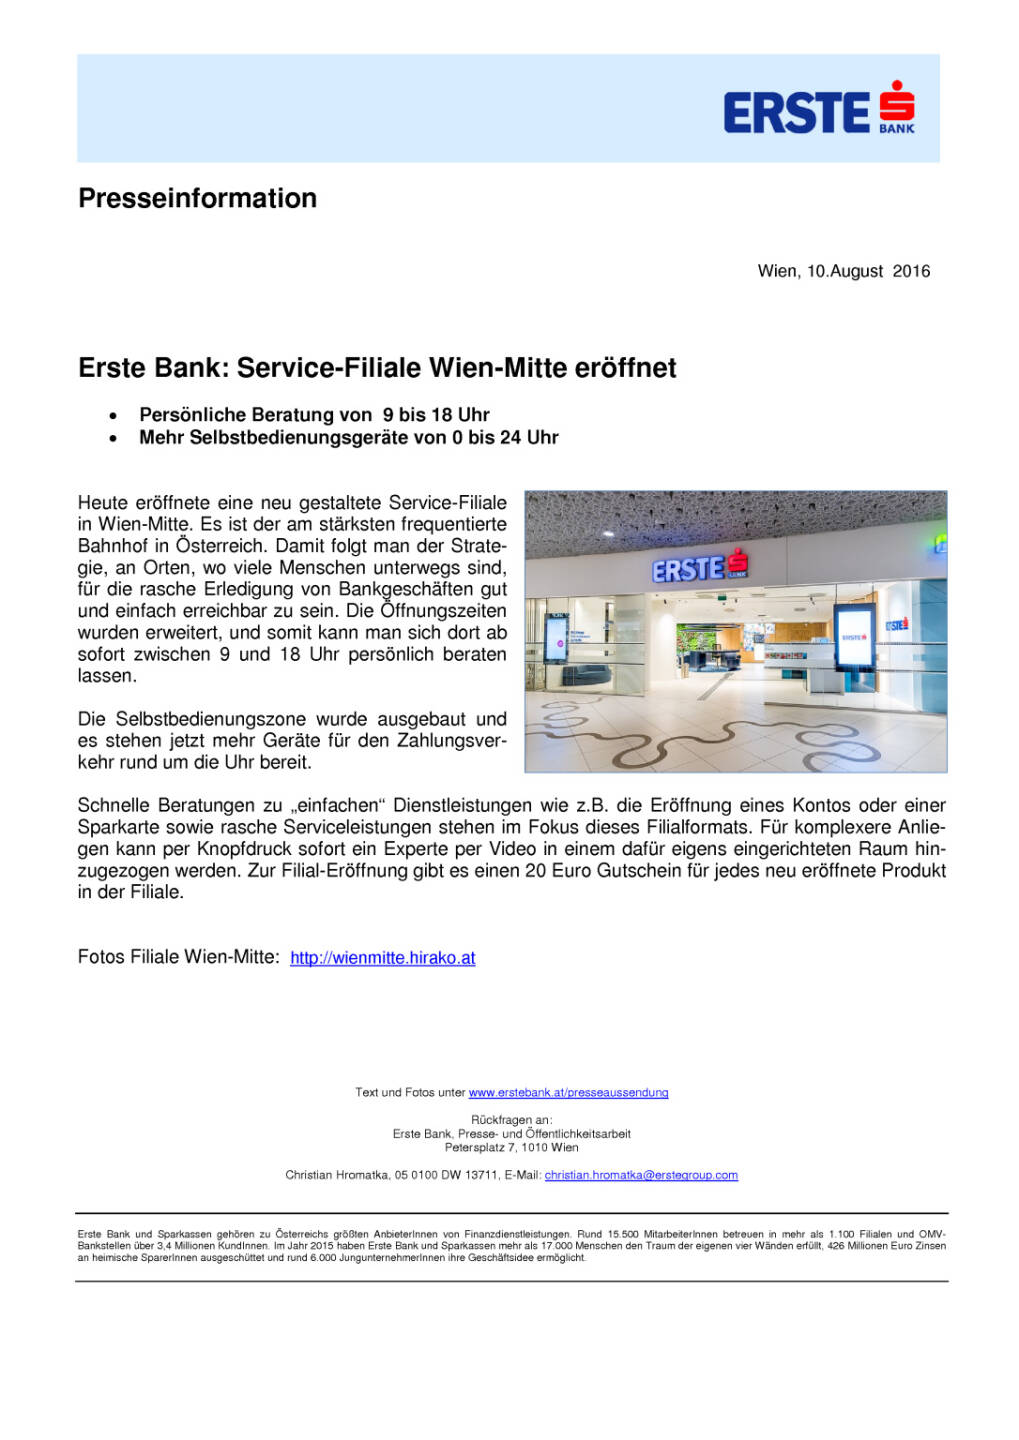 Erste Bank: Service-Filiale Wien-Mitte eröffnet, Seite 1/1, komplettes Dokument unter http://boerse-social.com/static/uploads/file_1602_erste_bank_service-filiale_wien-mitte_eroffnet.pdf